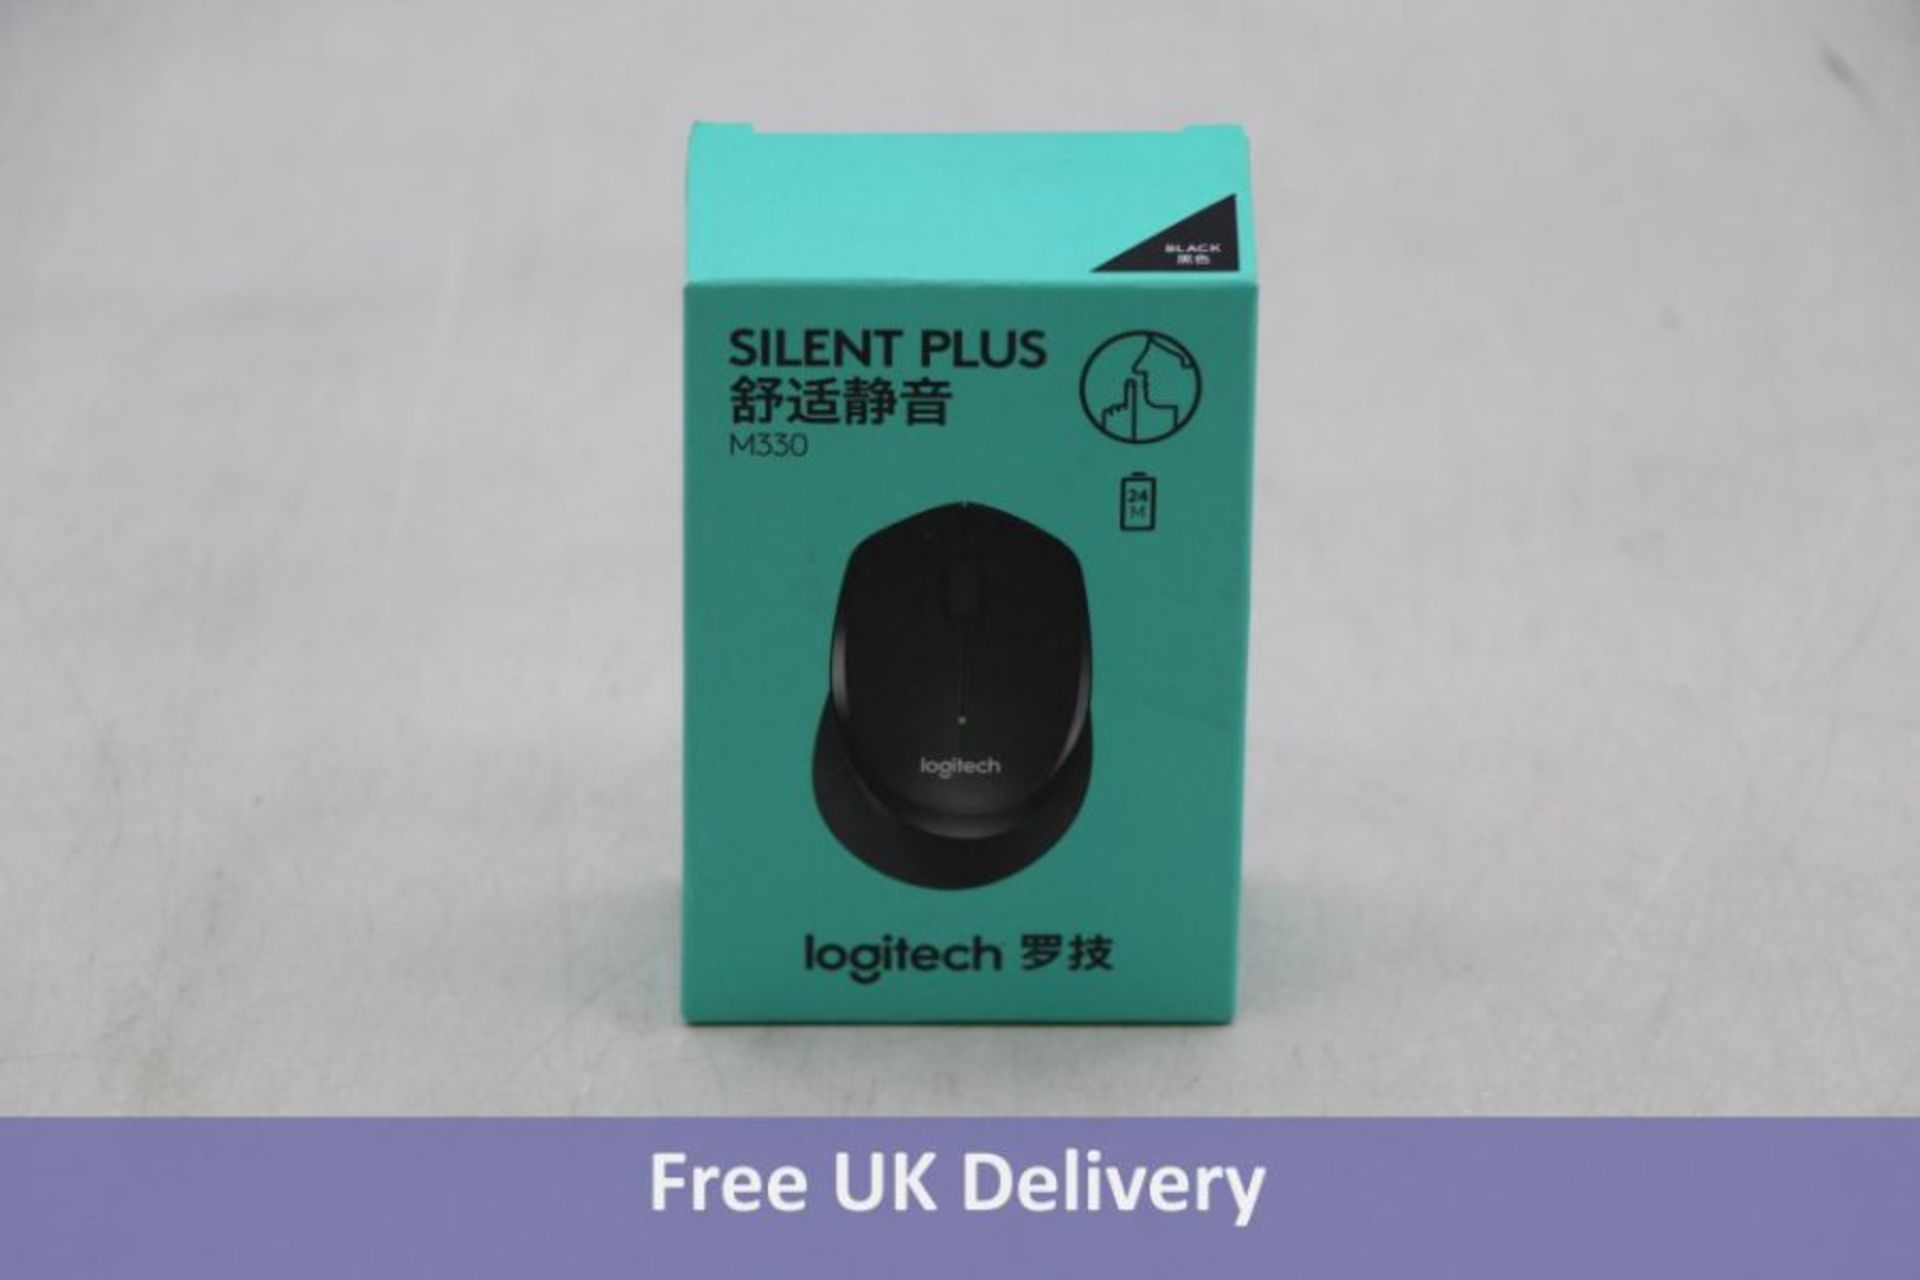 Twenty Logitech M330 Silent Plus Wireless Mice, Black - Image 3 of 4